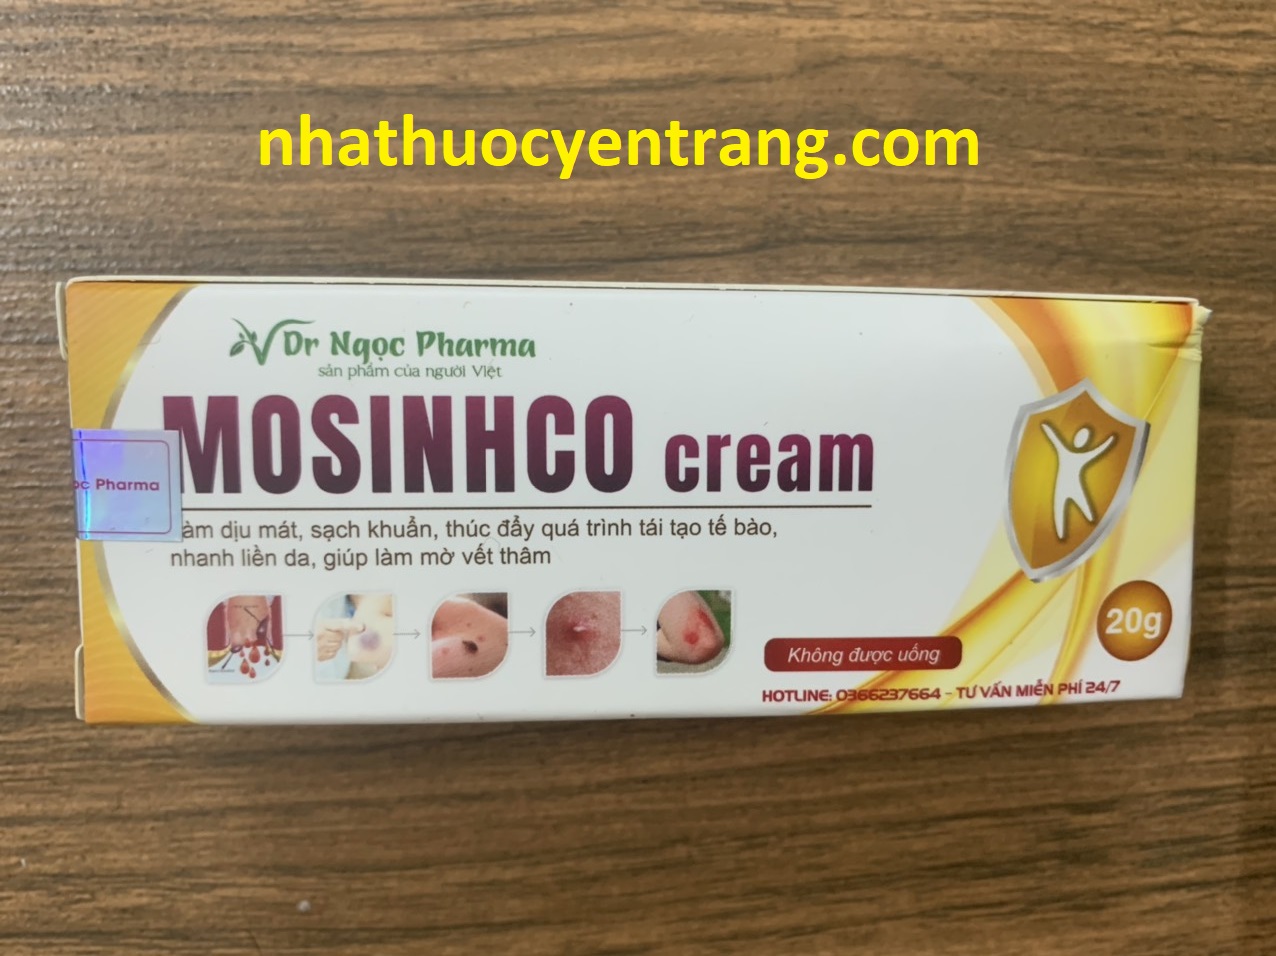 Mosinhco cream 20g